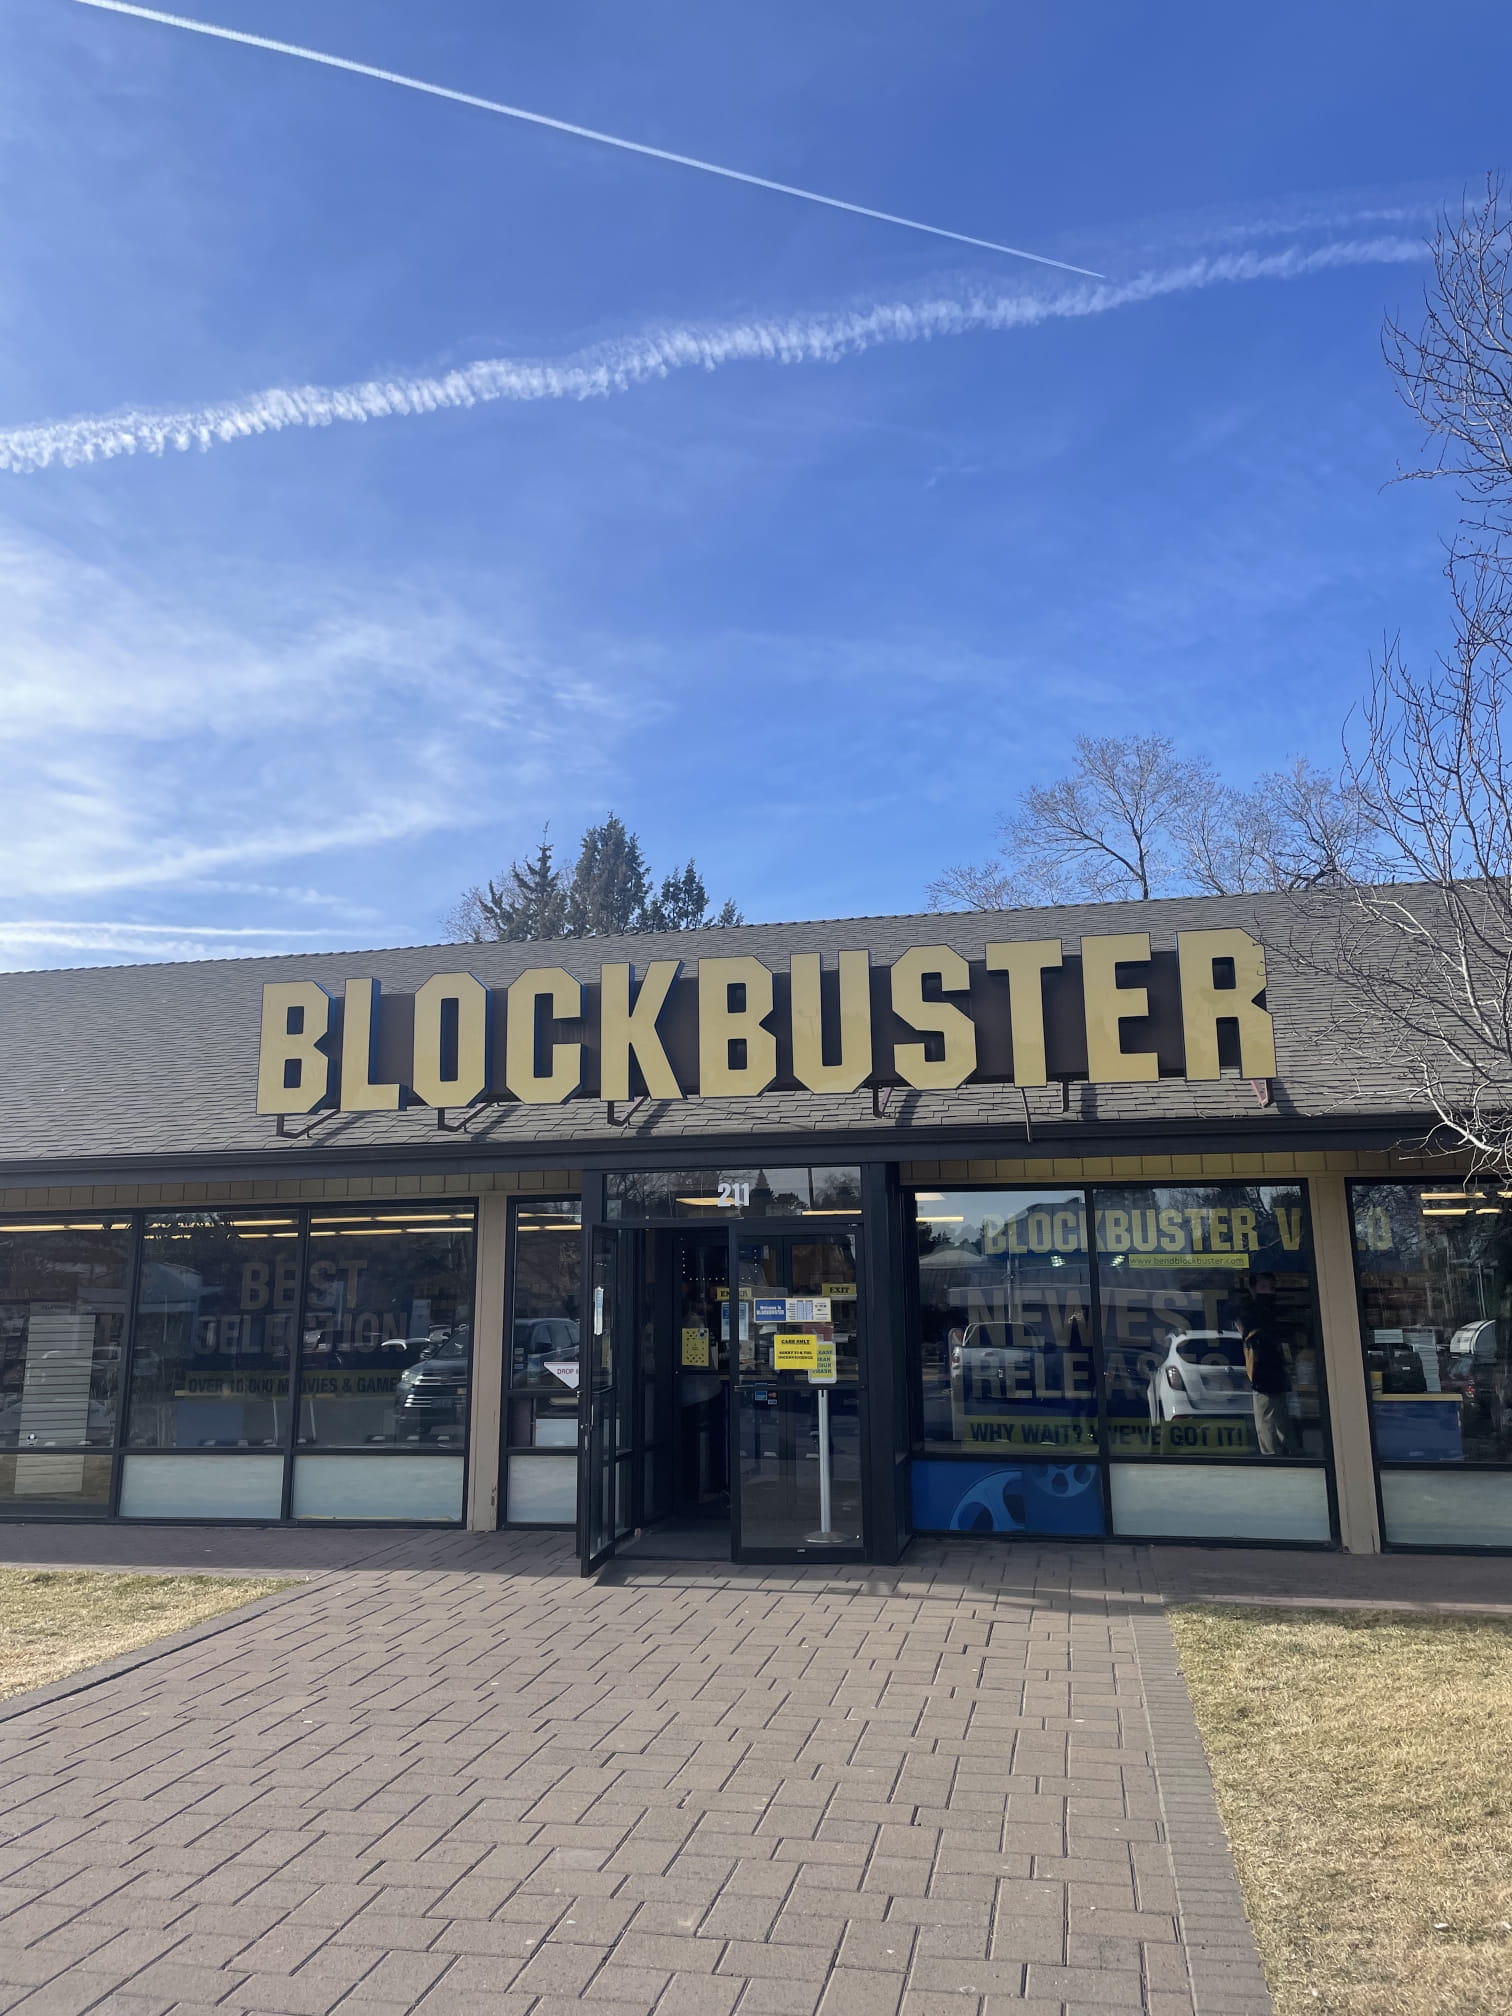 The last blockbuster in the world